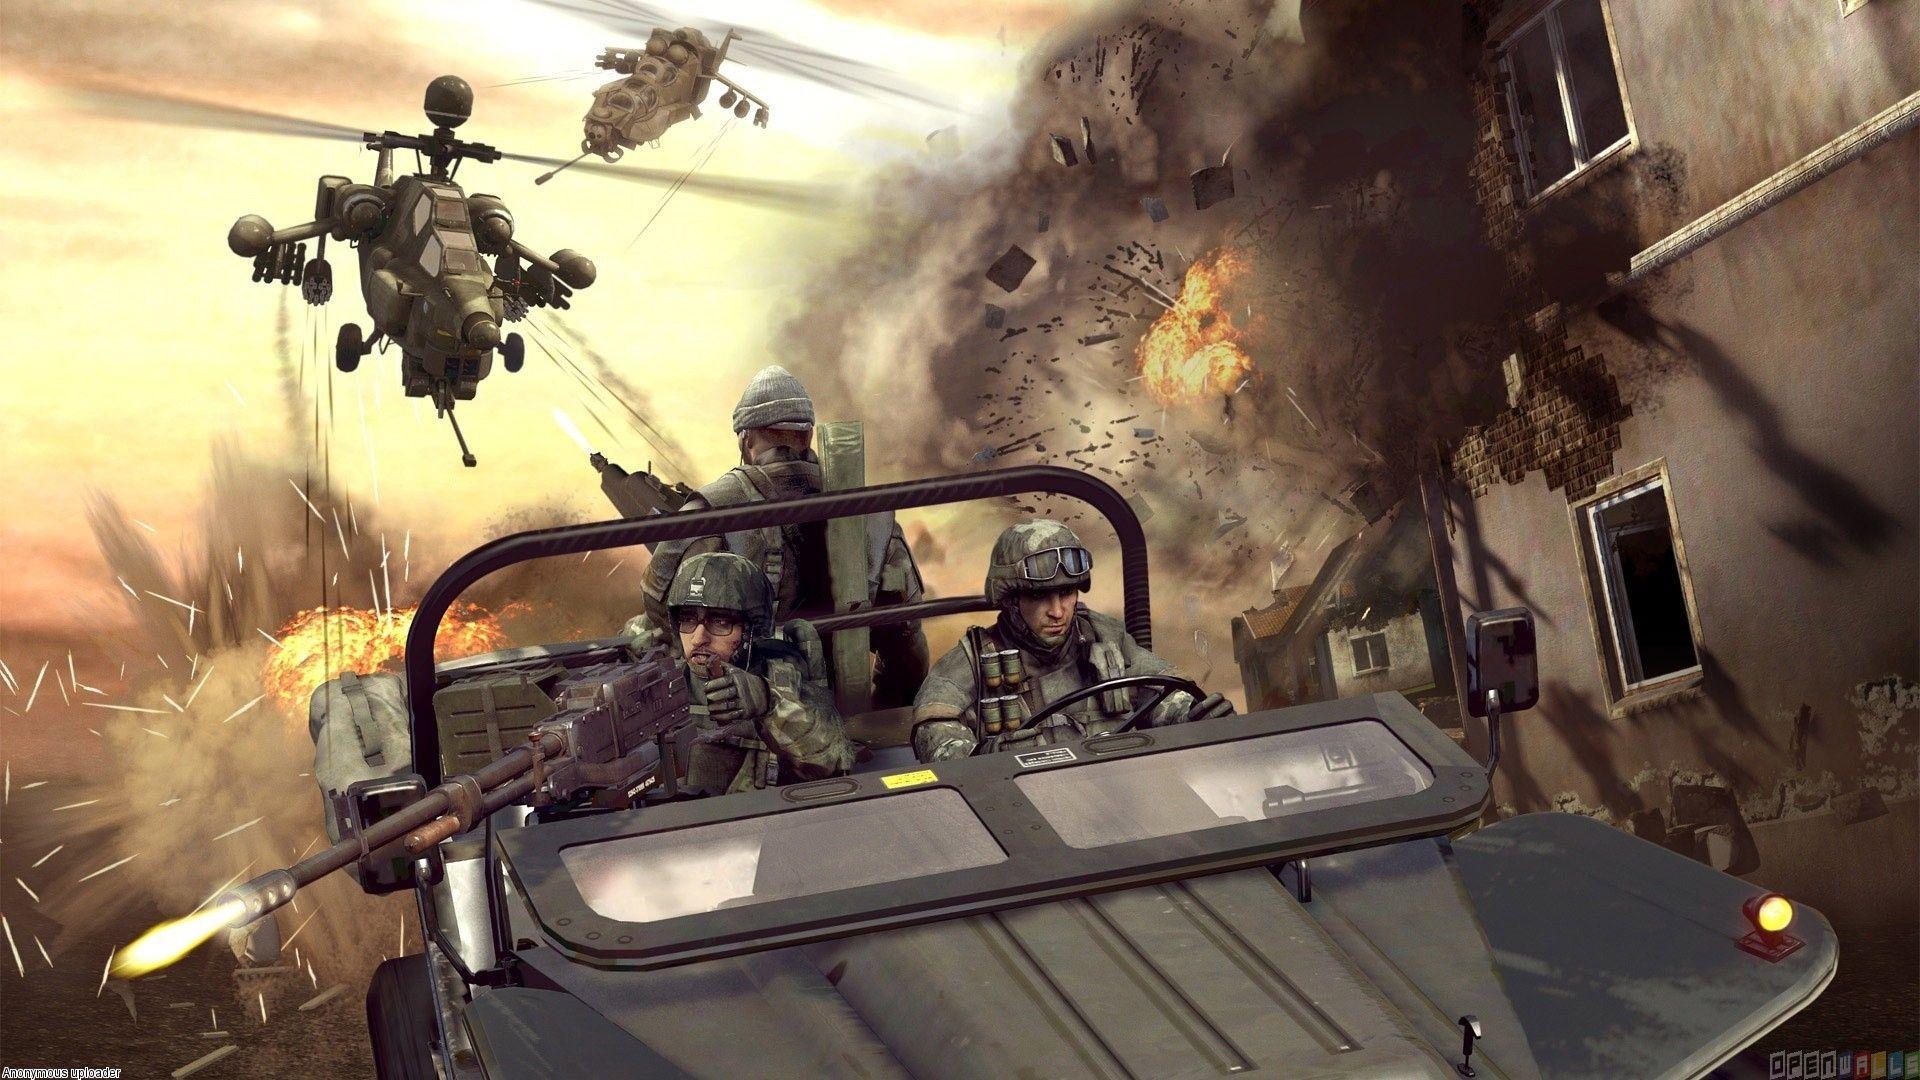 Call Of Duty World At War Wallpaper, Call Of Duty World At War